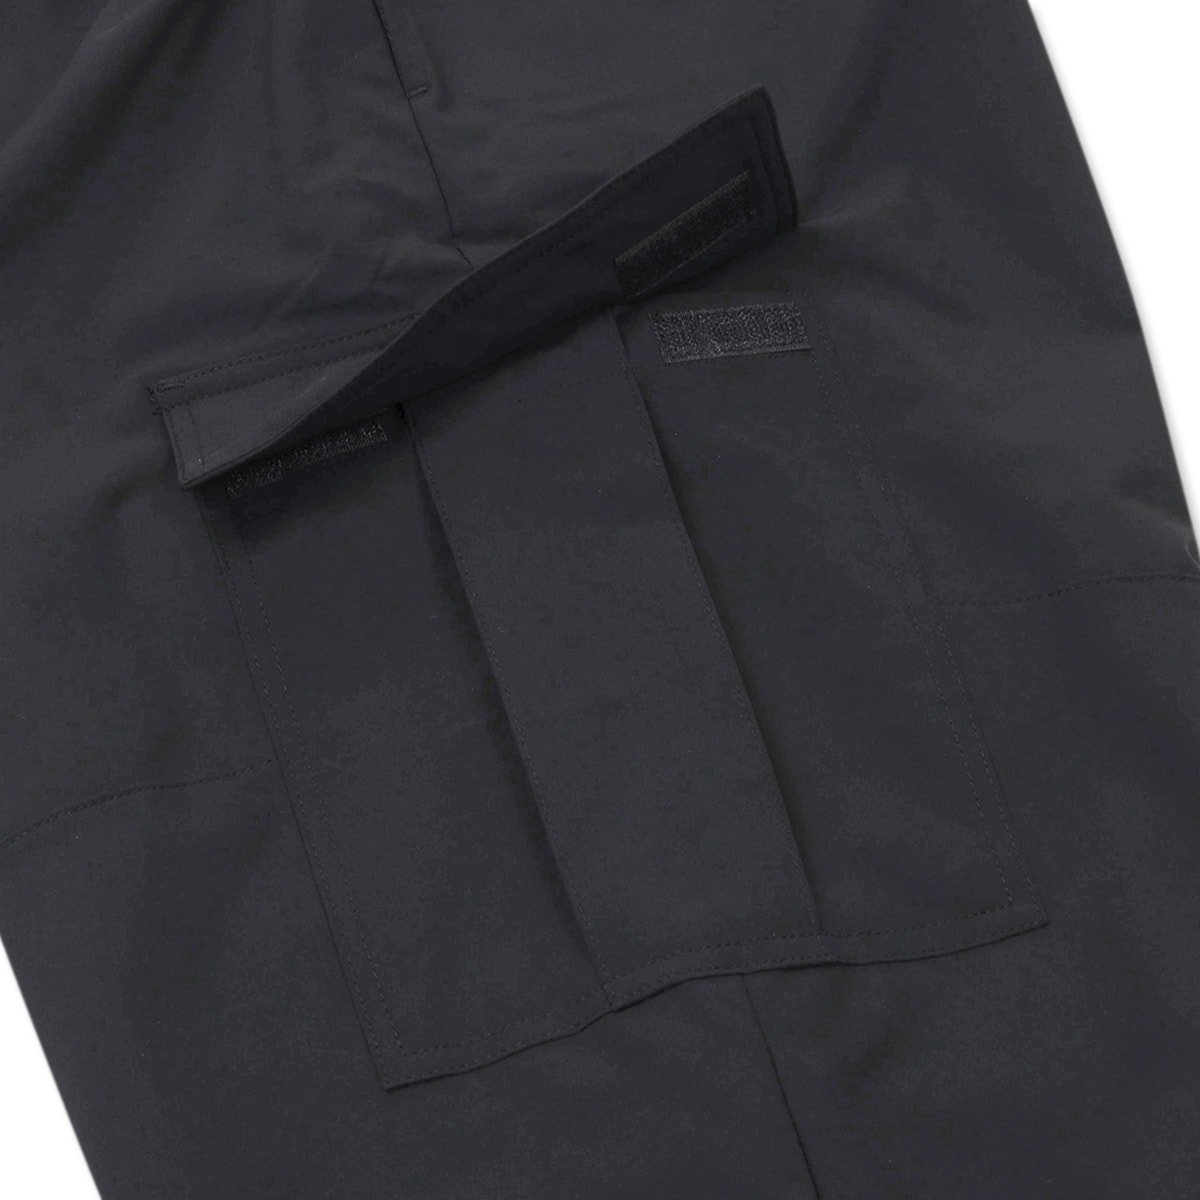 transition paneled cargo pants【black】 - Arch ☆ アーチ 